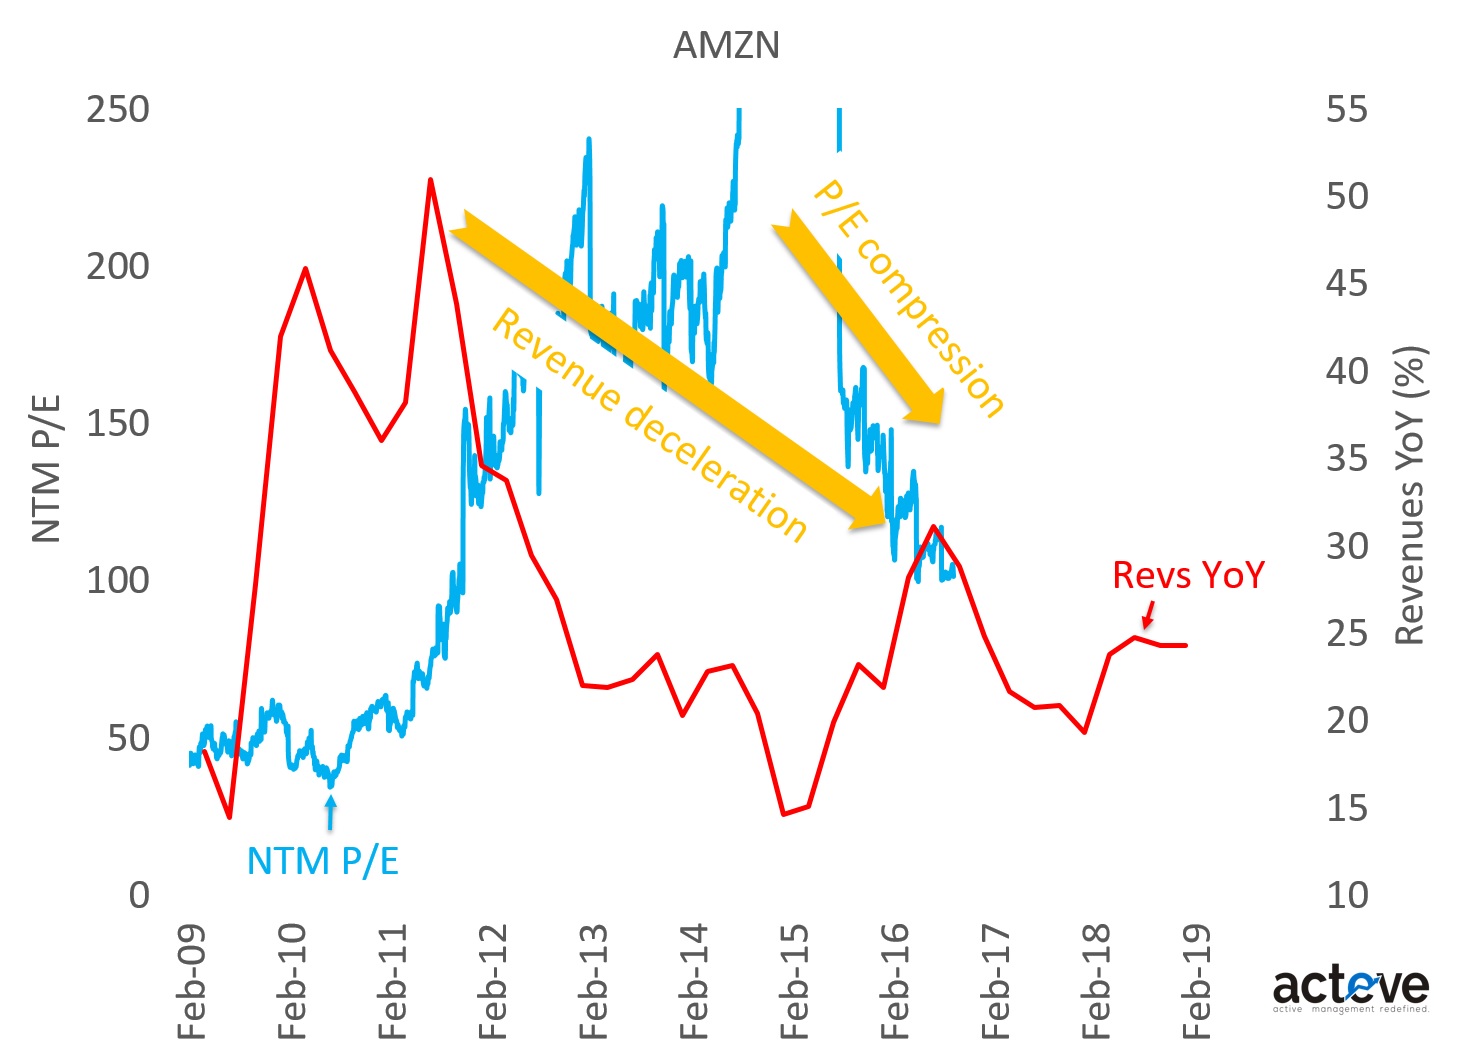 Amazon.com Inc (AMZN) Valuation Risk - Sellside Earning Estimates